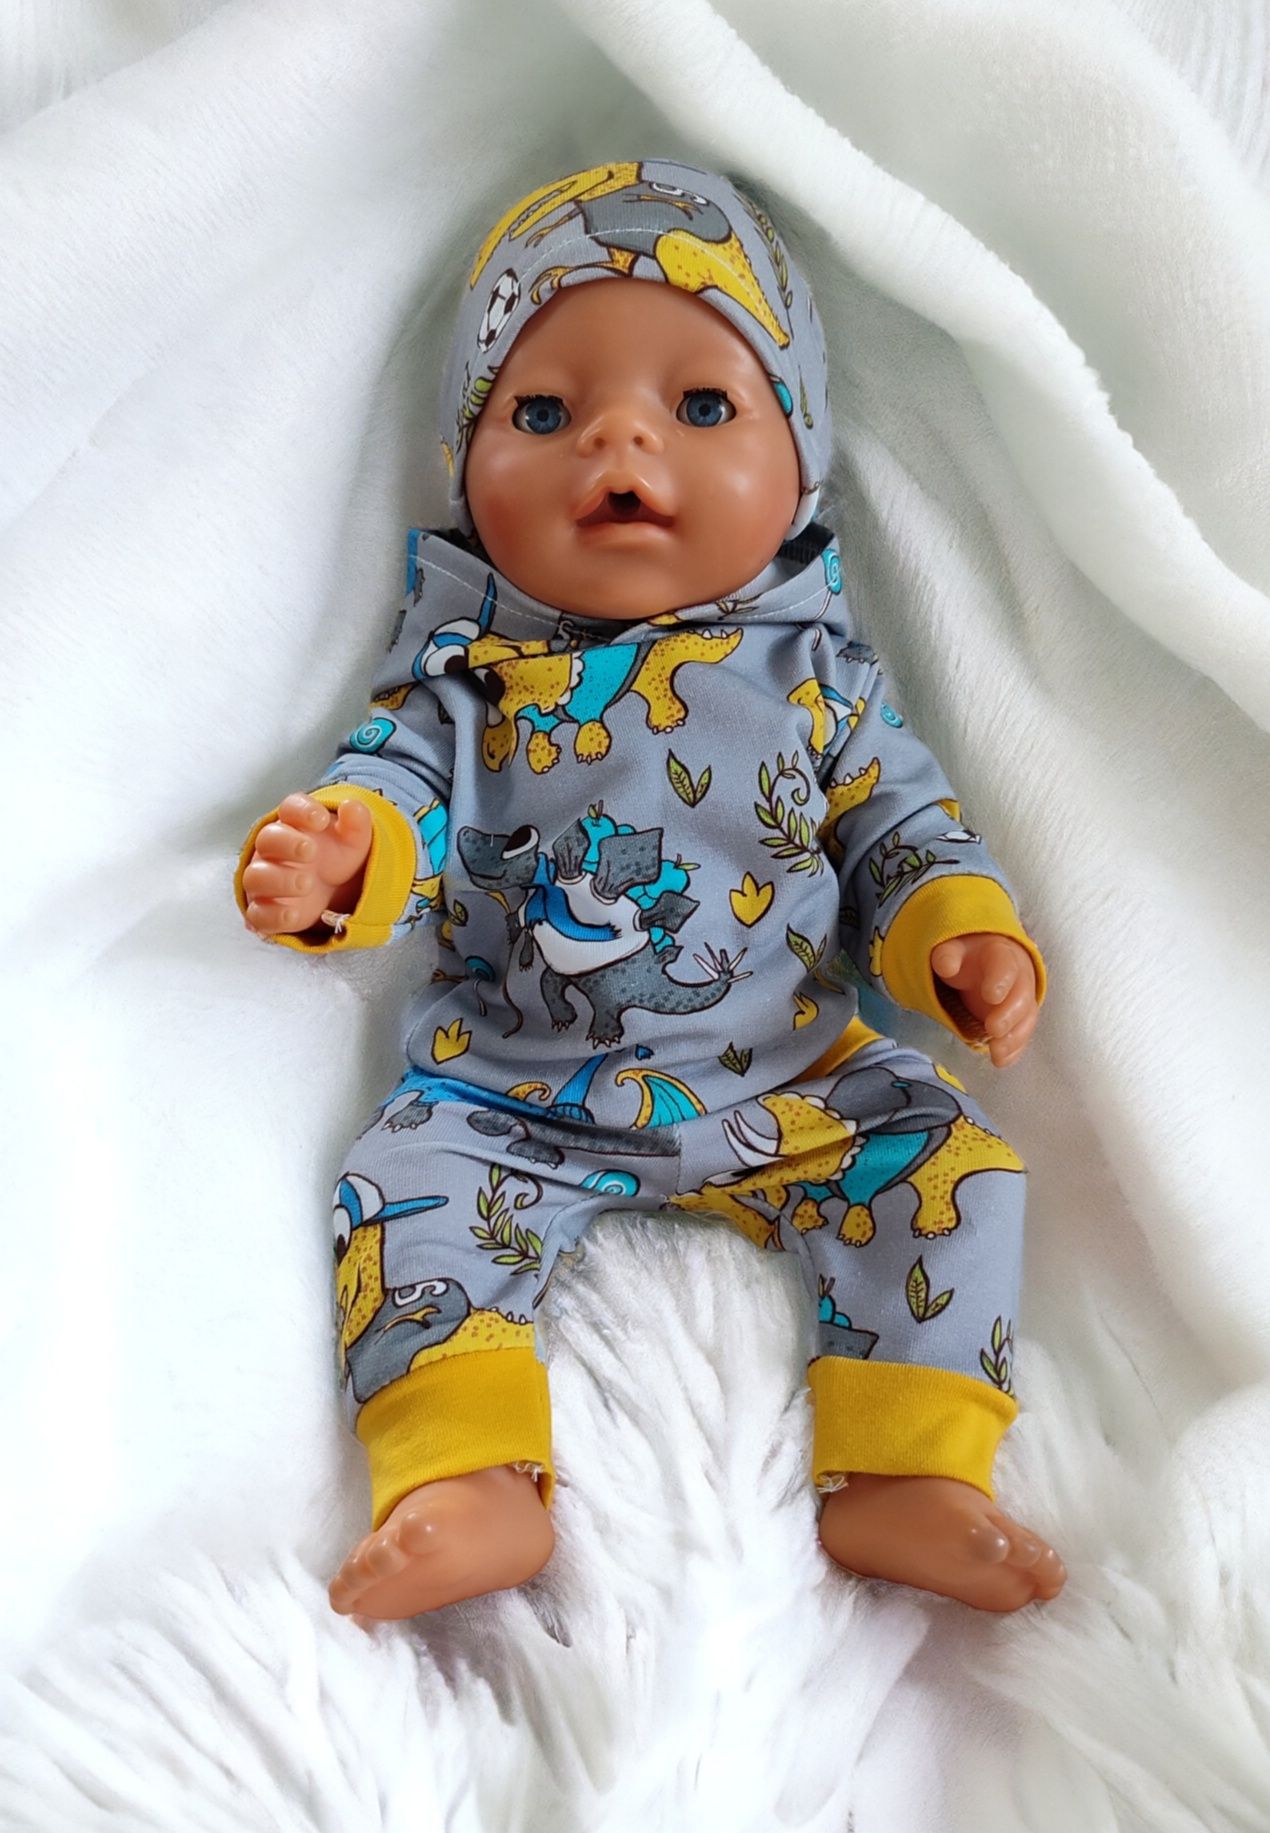 Ubranko dla lalki baby Born -chłopiec.